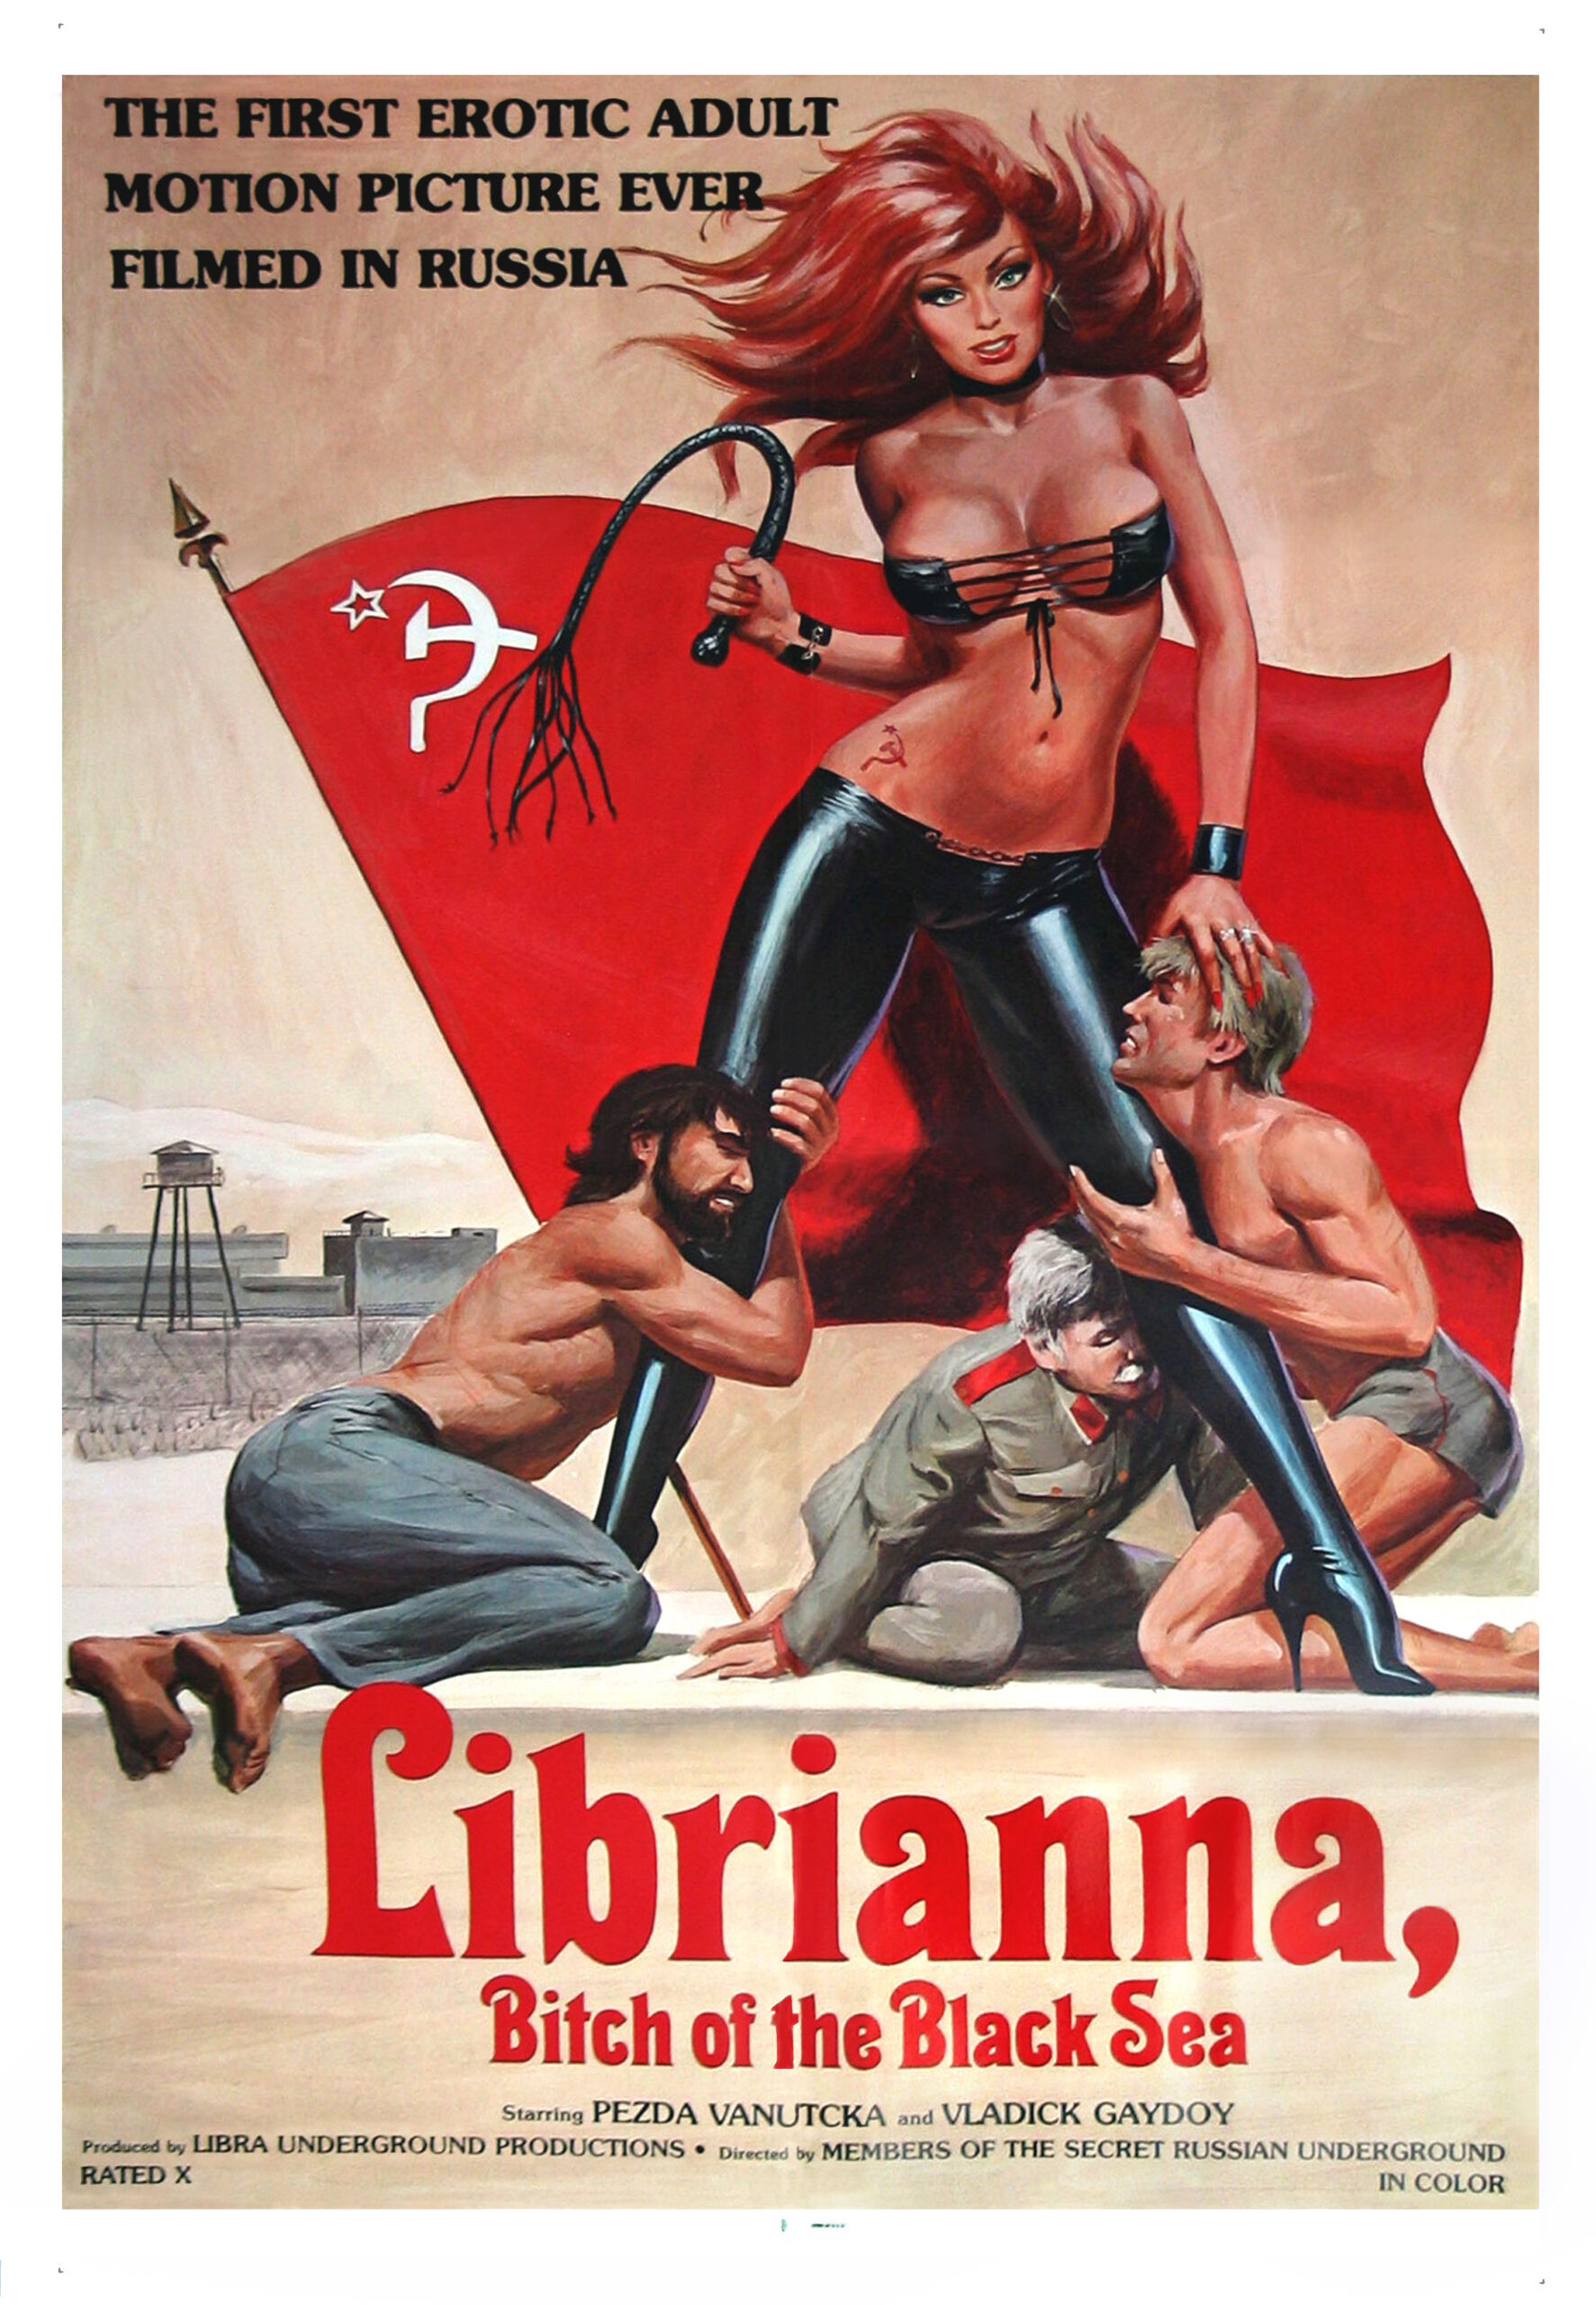 Librianna, Bitch of the Black Sea (1981) 1 – librianna bitch of black sea poster 01 scaled